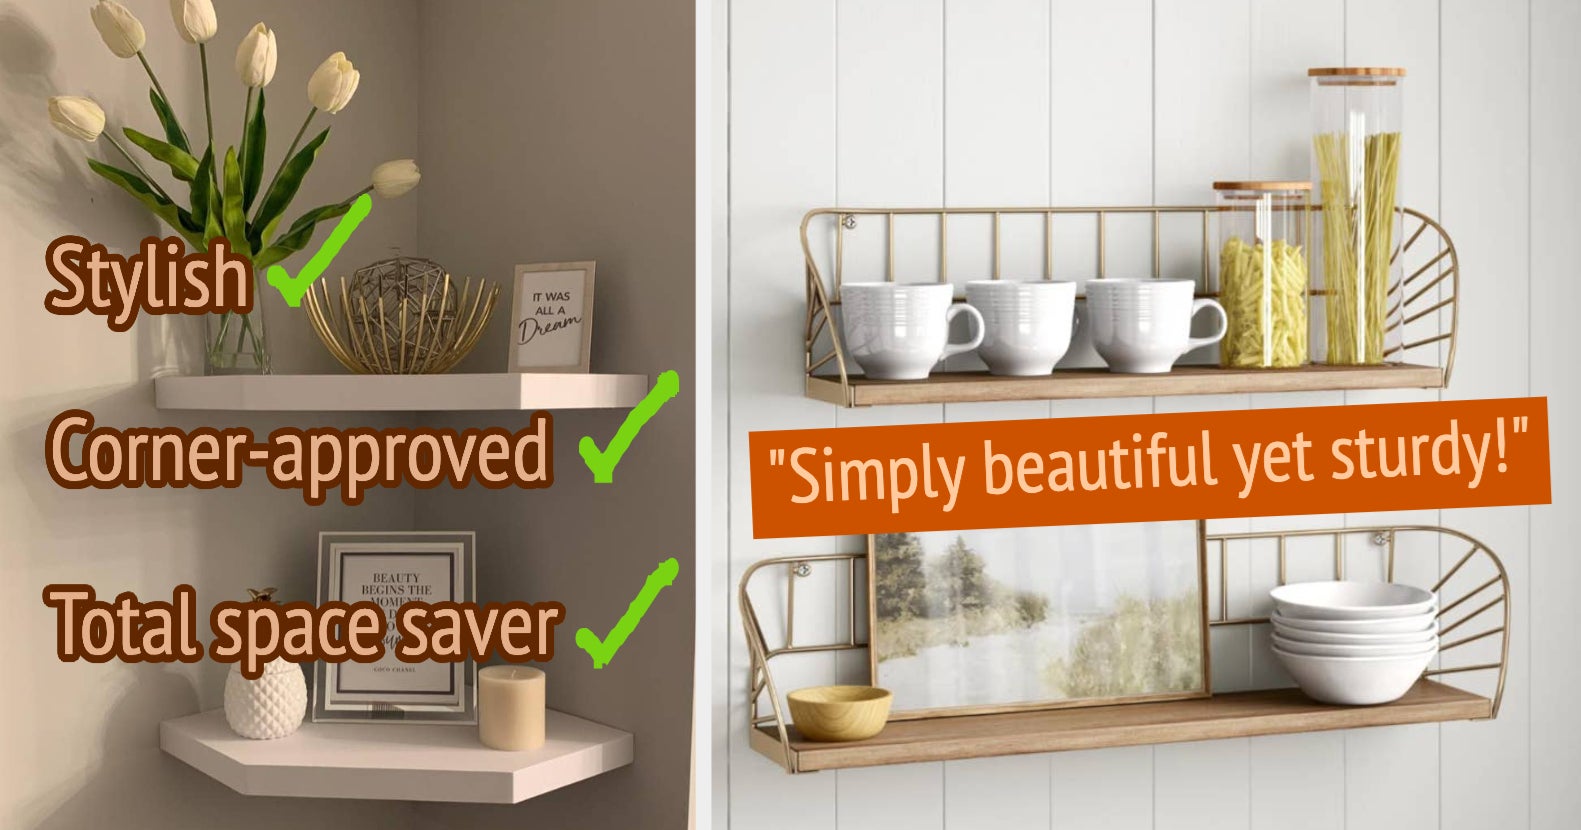 Mini Plant Wall Holder Tiny Shelf for Wall, Small Floating Shelves Adhesive  Shelves, Clear Acrylic Shower Shelf 